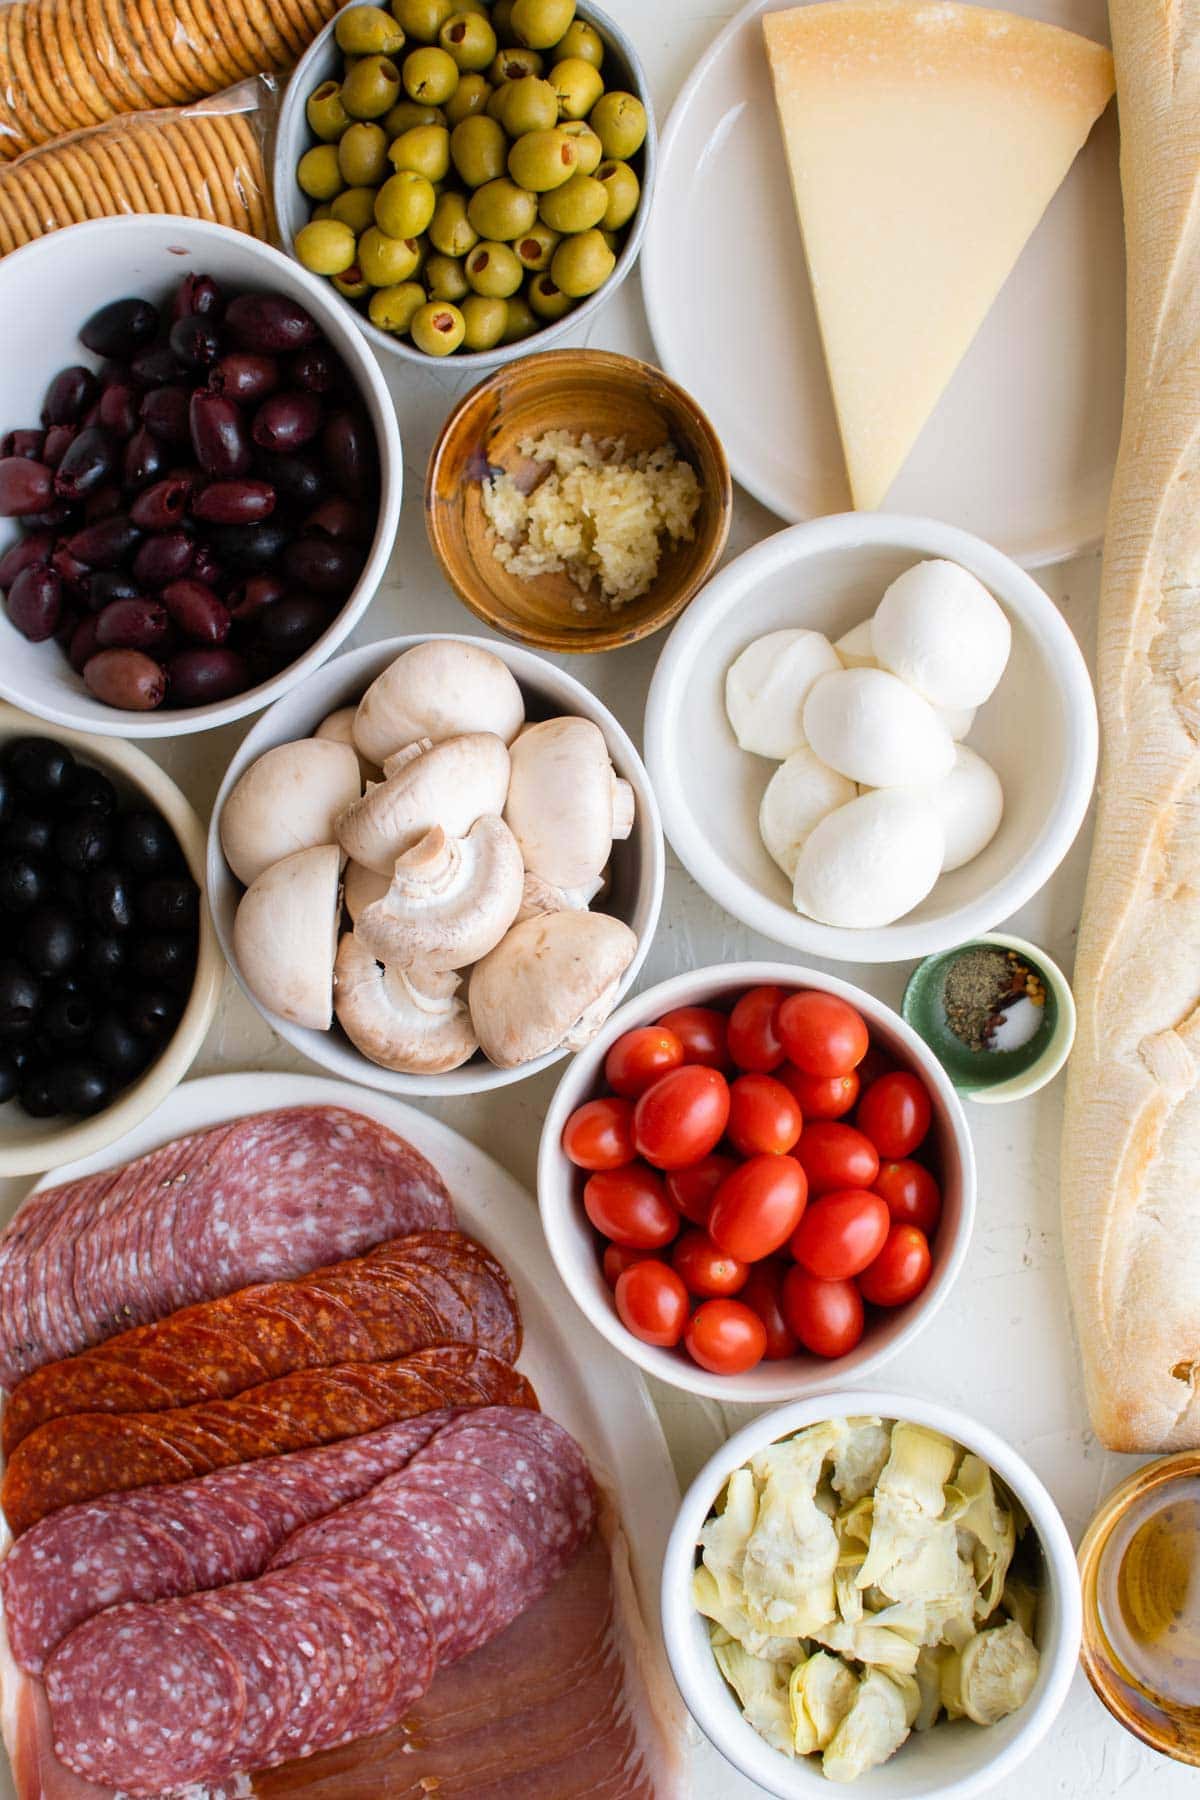 Salami, cheese, tomatoes, olives, mushrooms, bread, artichokes